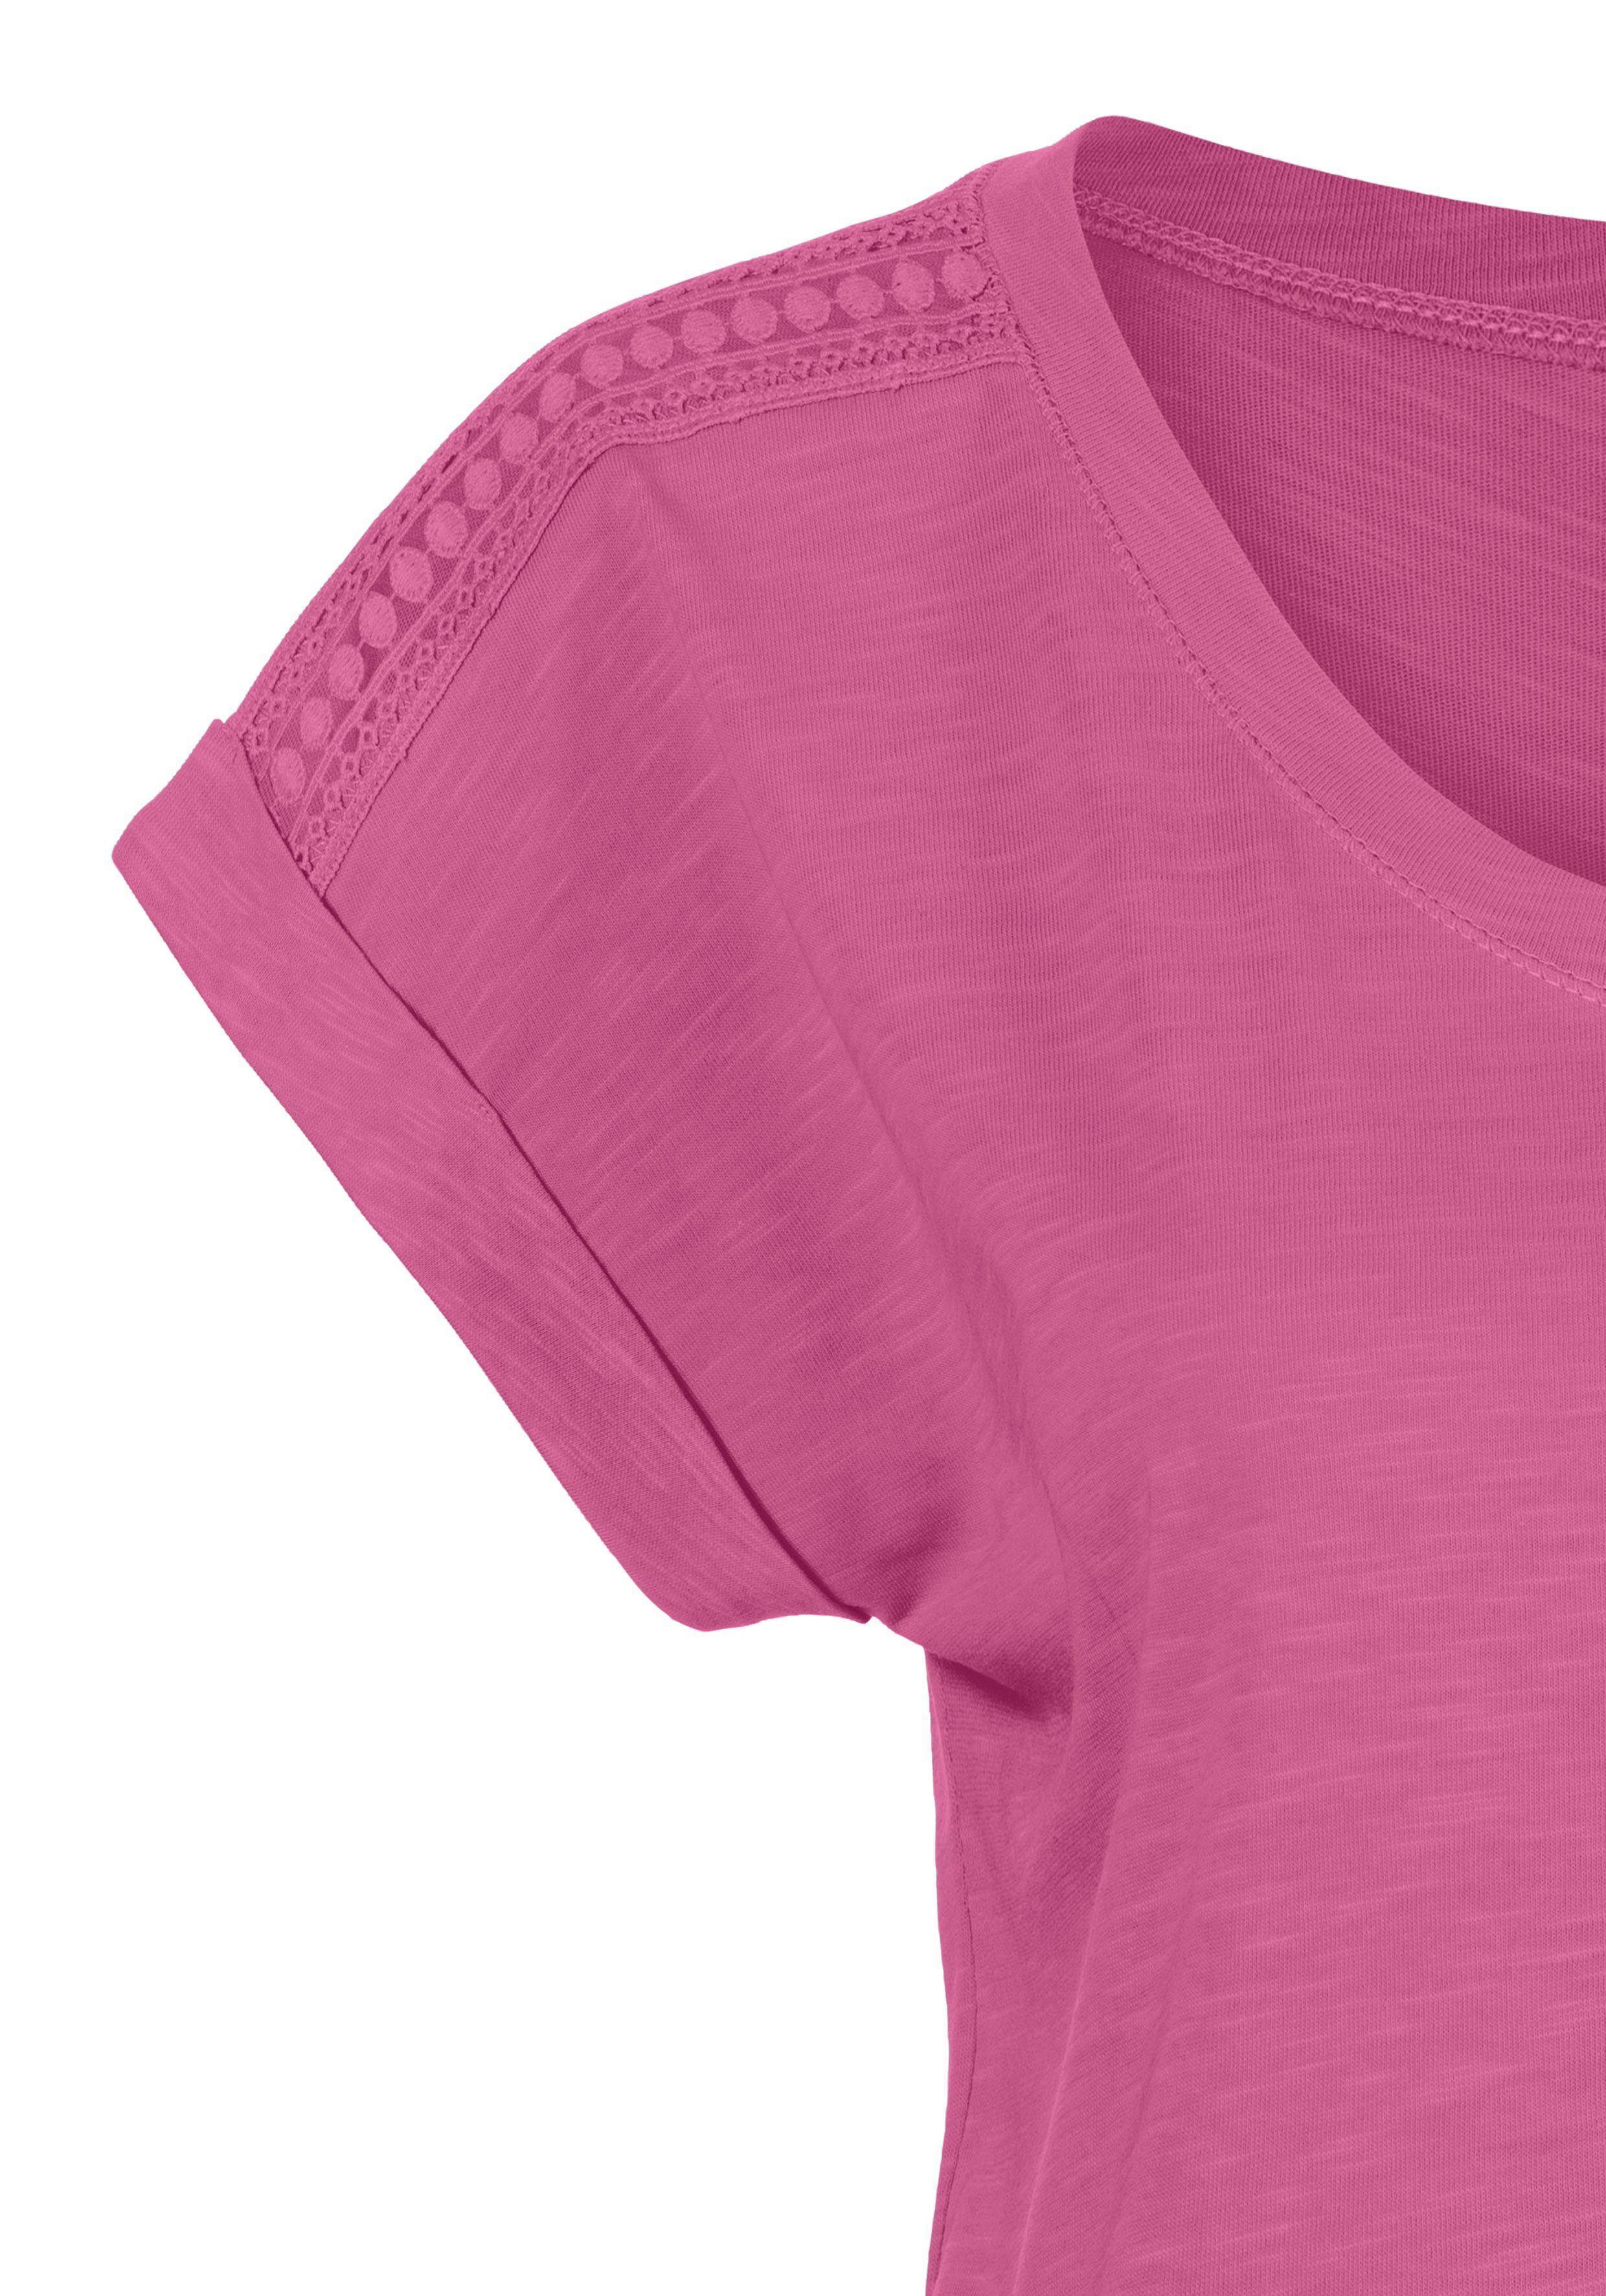 navy an Häkelspitze Schulter T-Shirt (Packung, Vivance pink, mit der 2er-Pack)